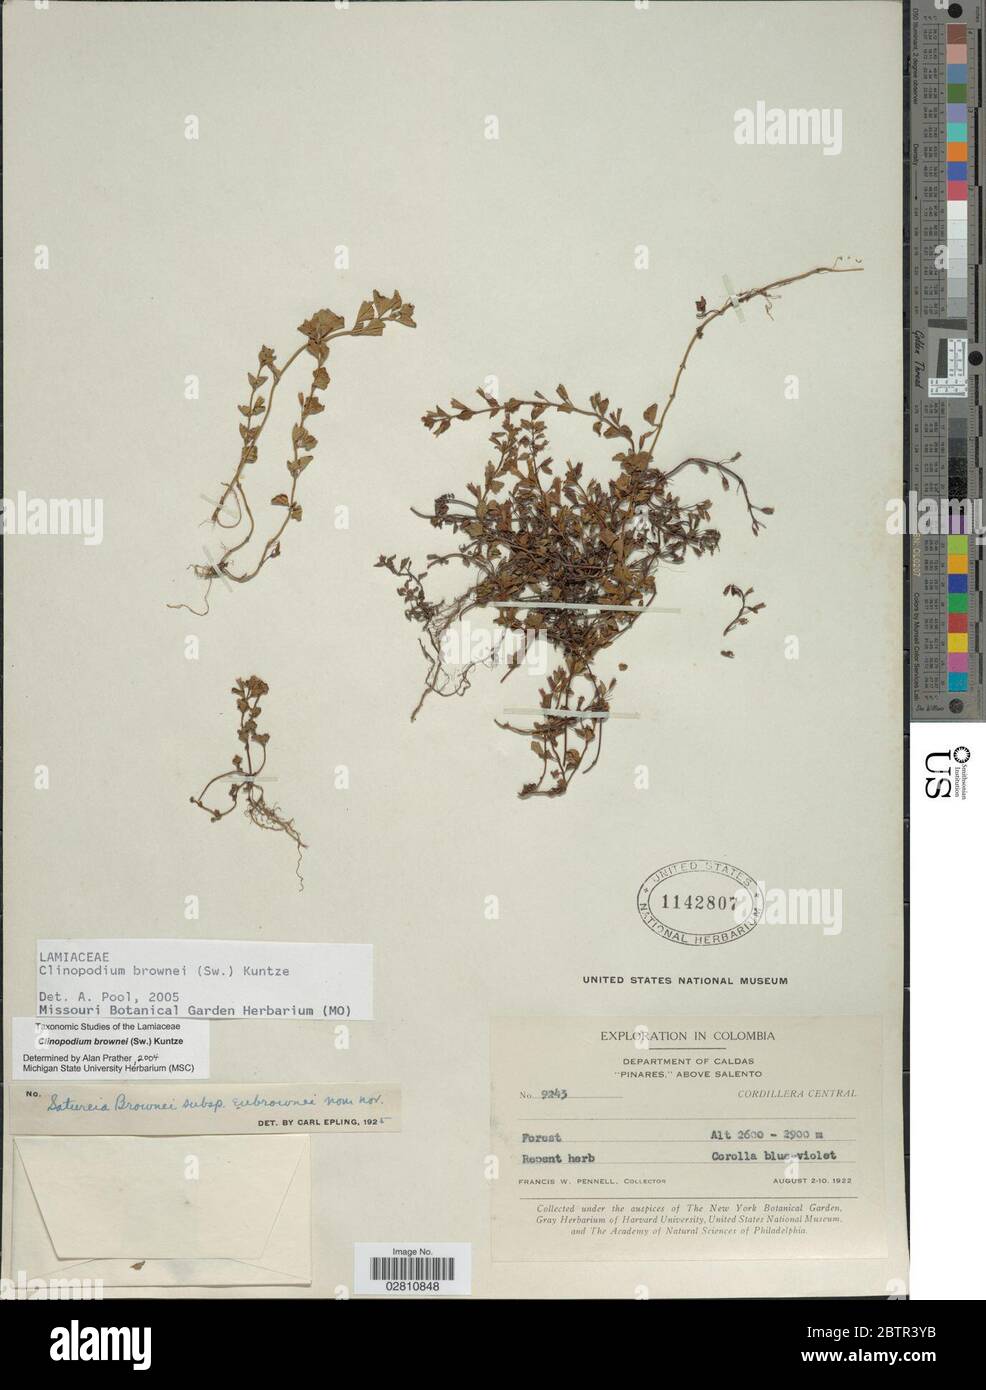 Clinopodium brownei Sw Kuntze. Stock Photo